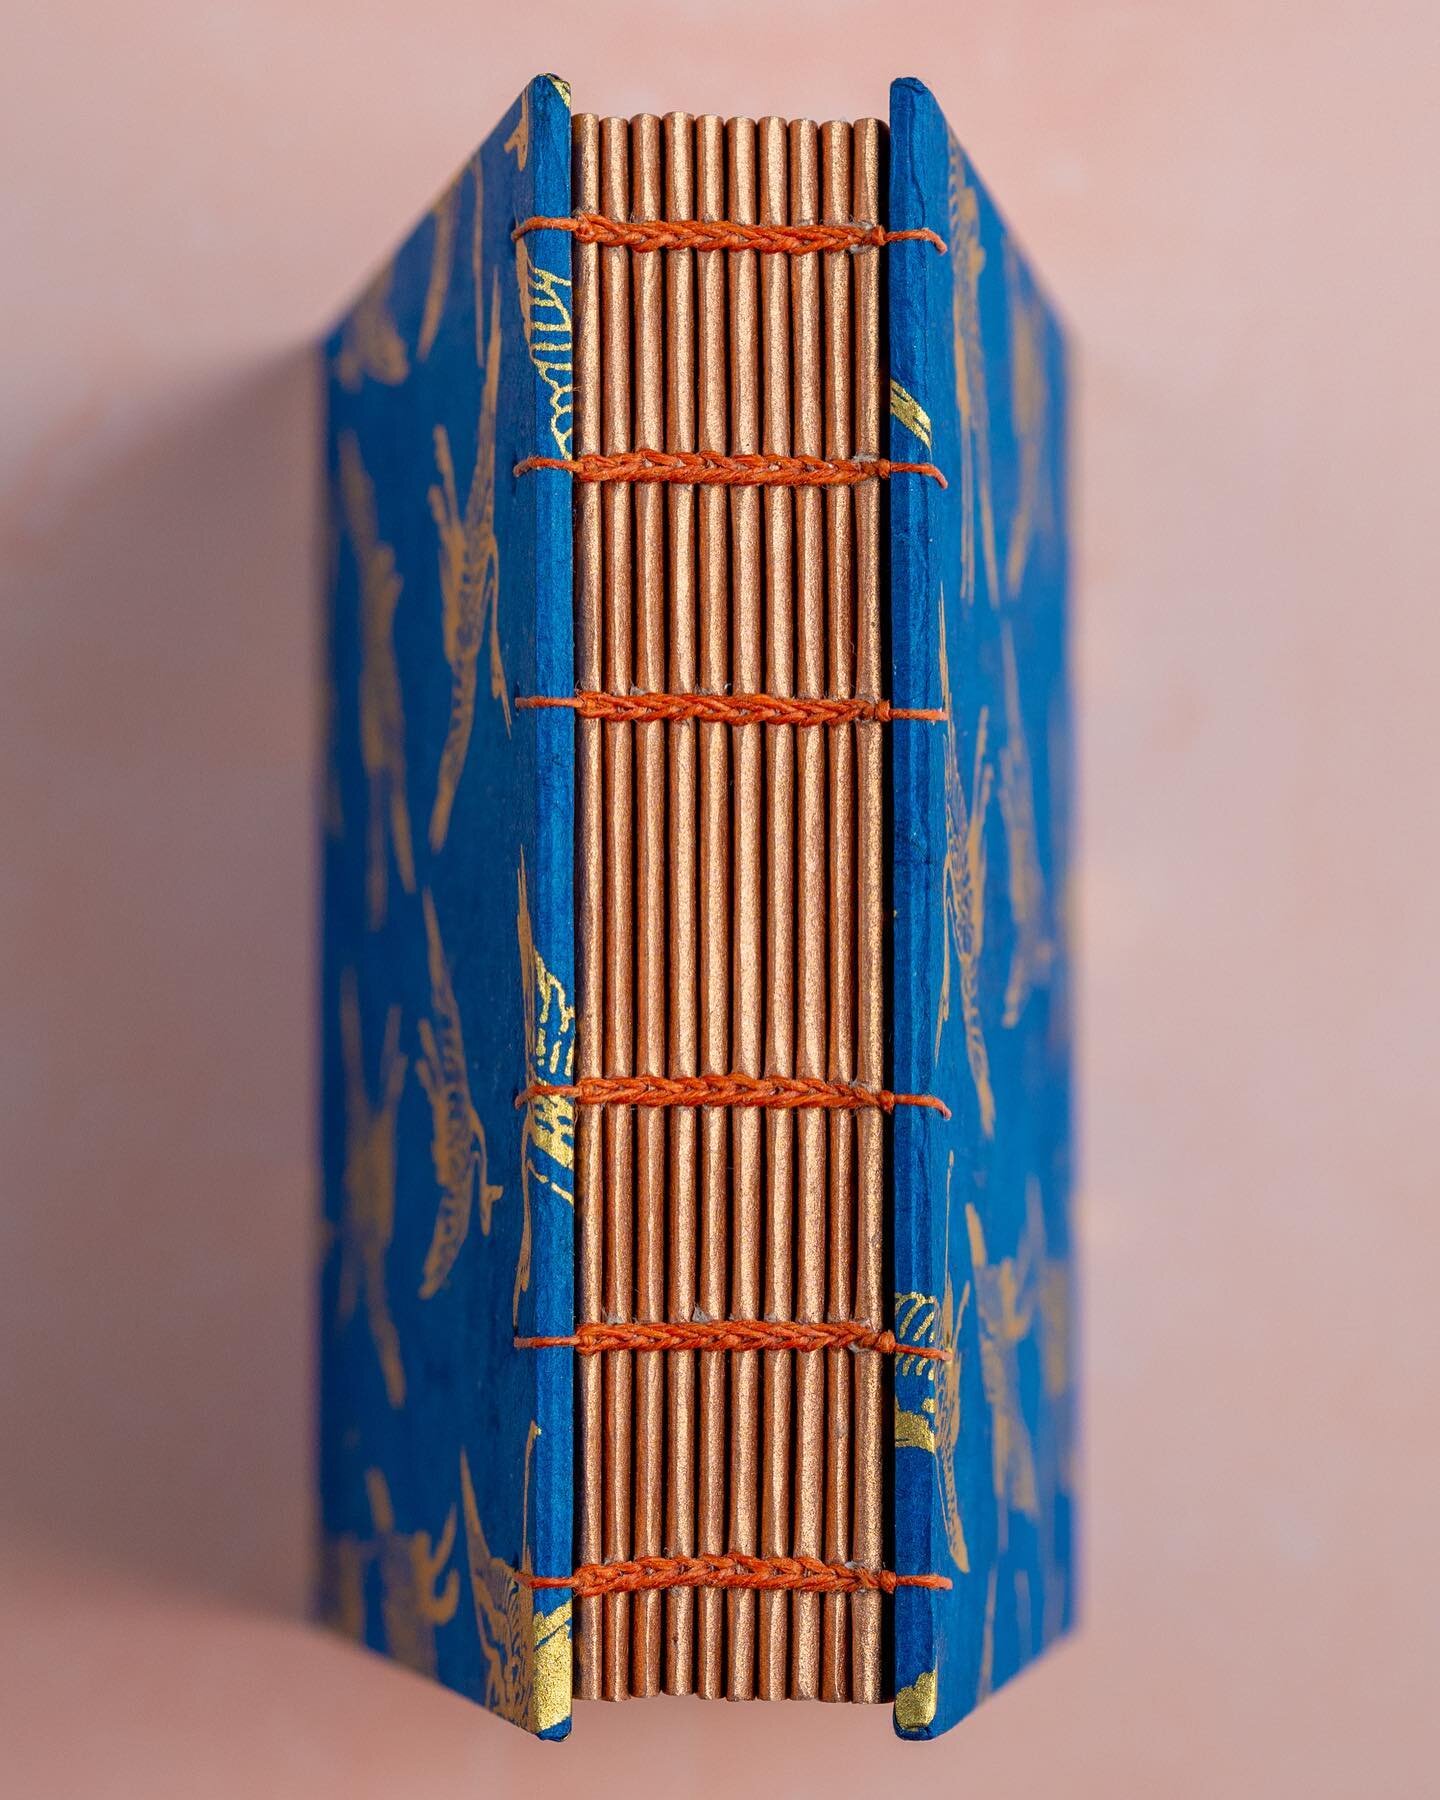 An old commission with a very pleasing spine 👌🏻

#bookbinding #copticstitch #copticbinding #blueandorange #handbound #craftsposure #britishcraft #handsewn #birminghammade #handmadesketchbook